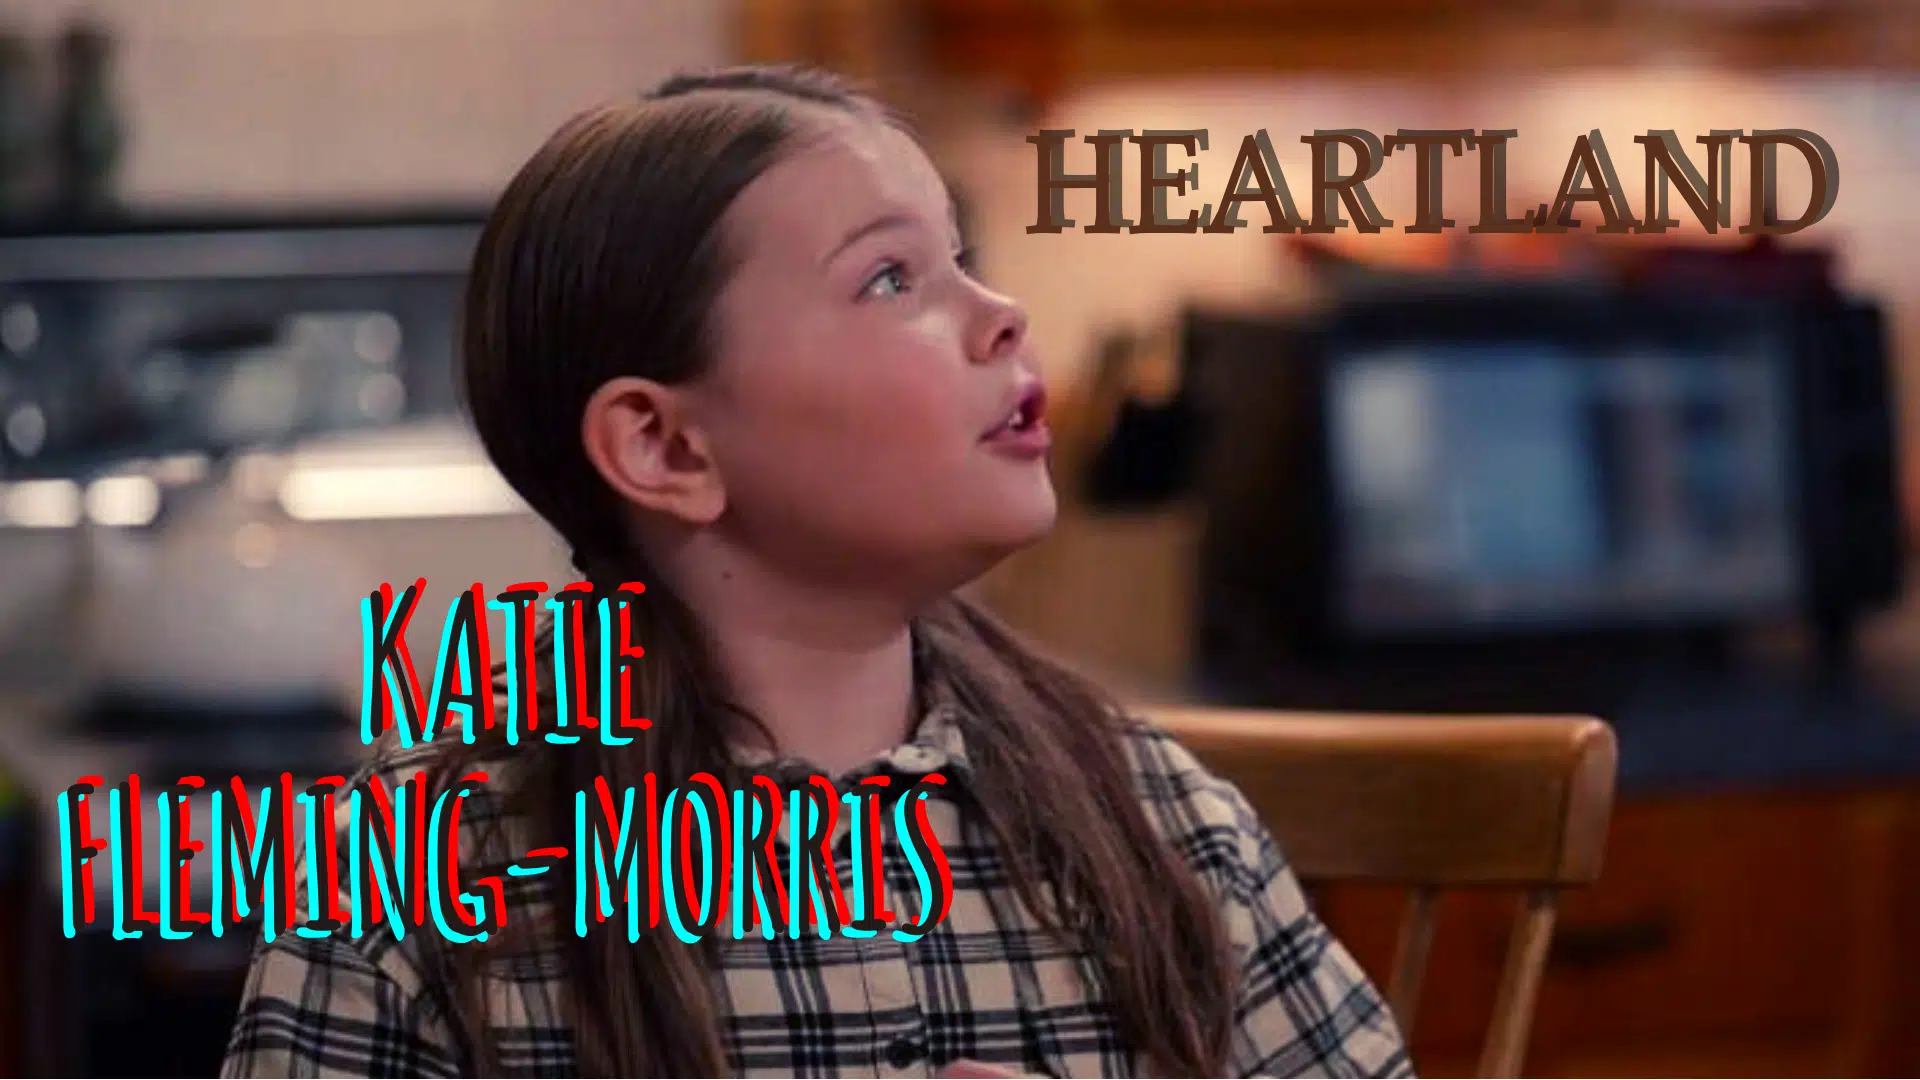 Katie Fleming-Morris Heartland